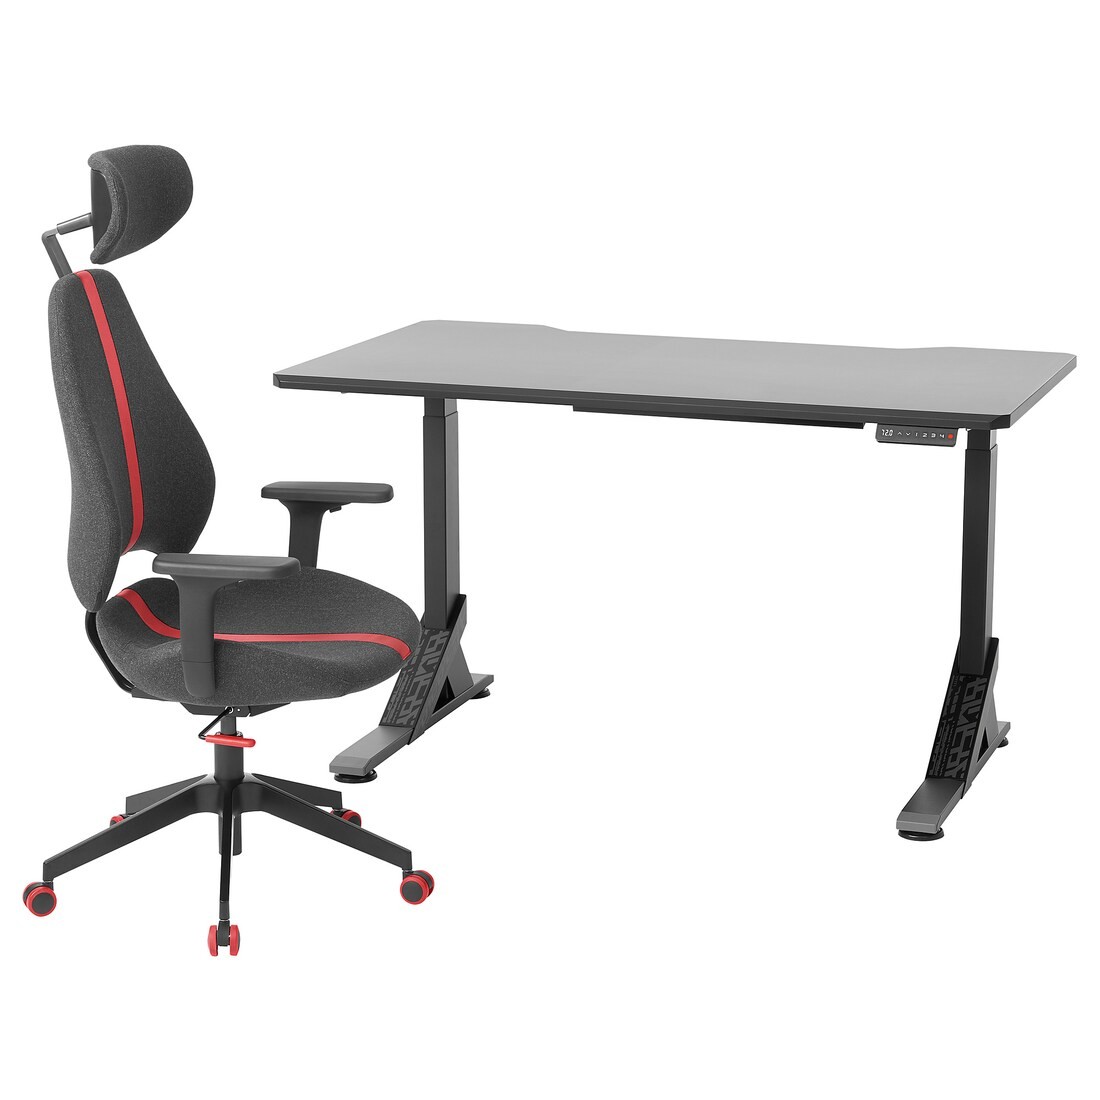 UPPSPEL УППСПЕЛЬ / GRUPPSPEL Геймерский стол и стул, черный / серый, 140x80 cм